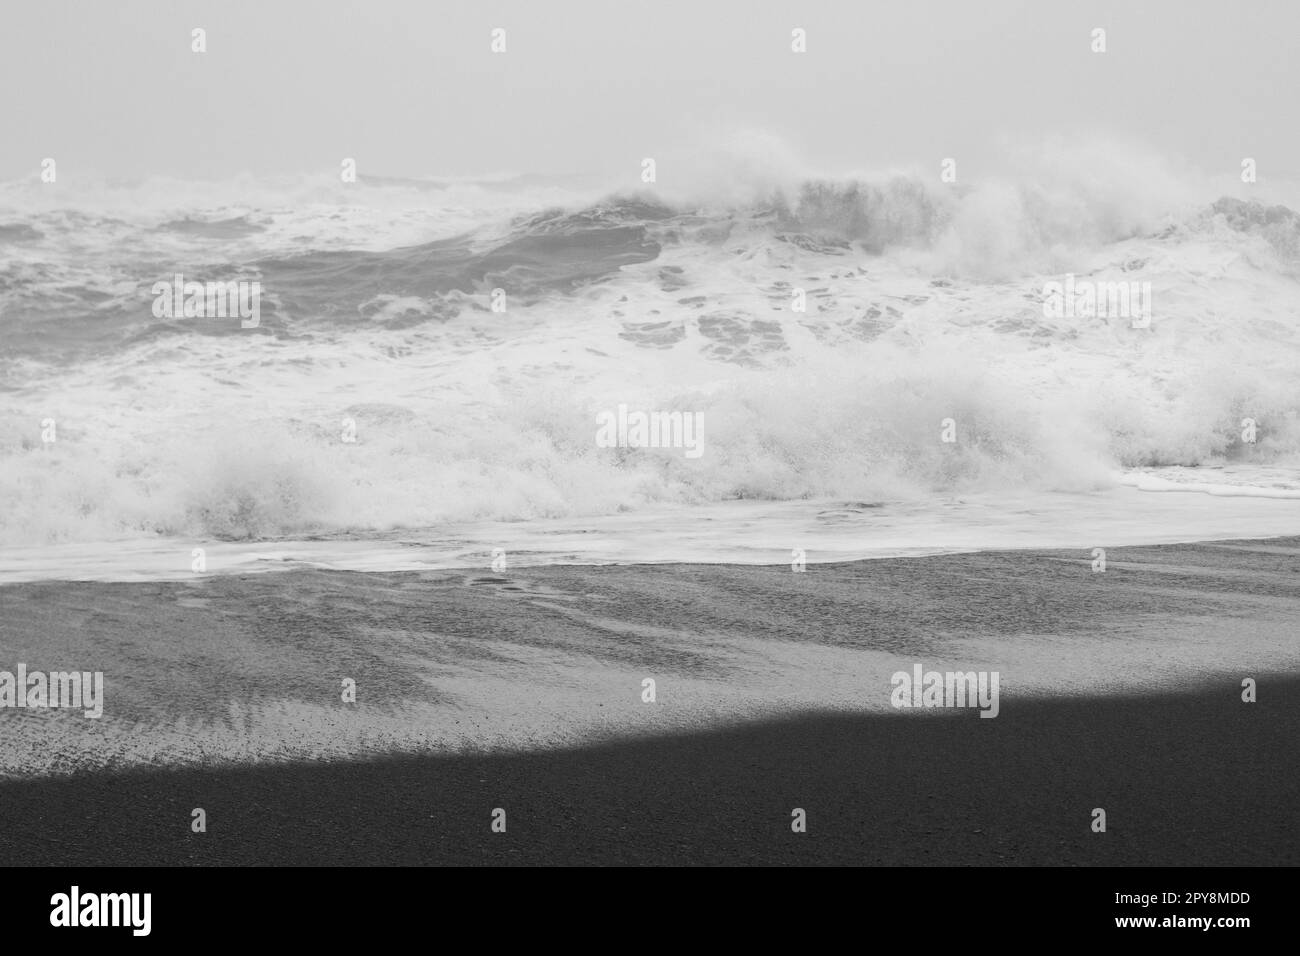 Waves rolling at storm monochrome landscape photo Stock Photo